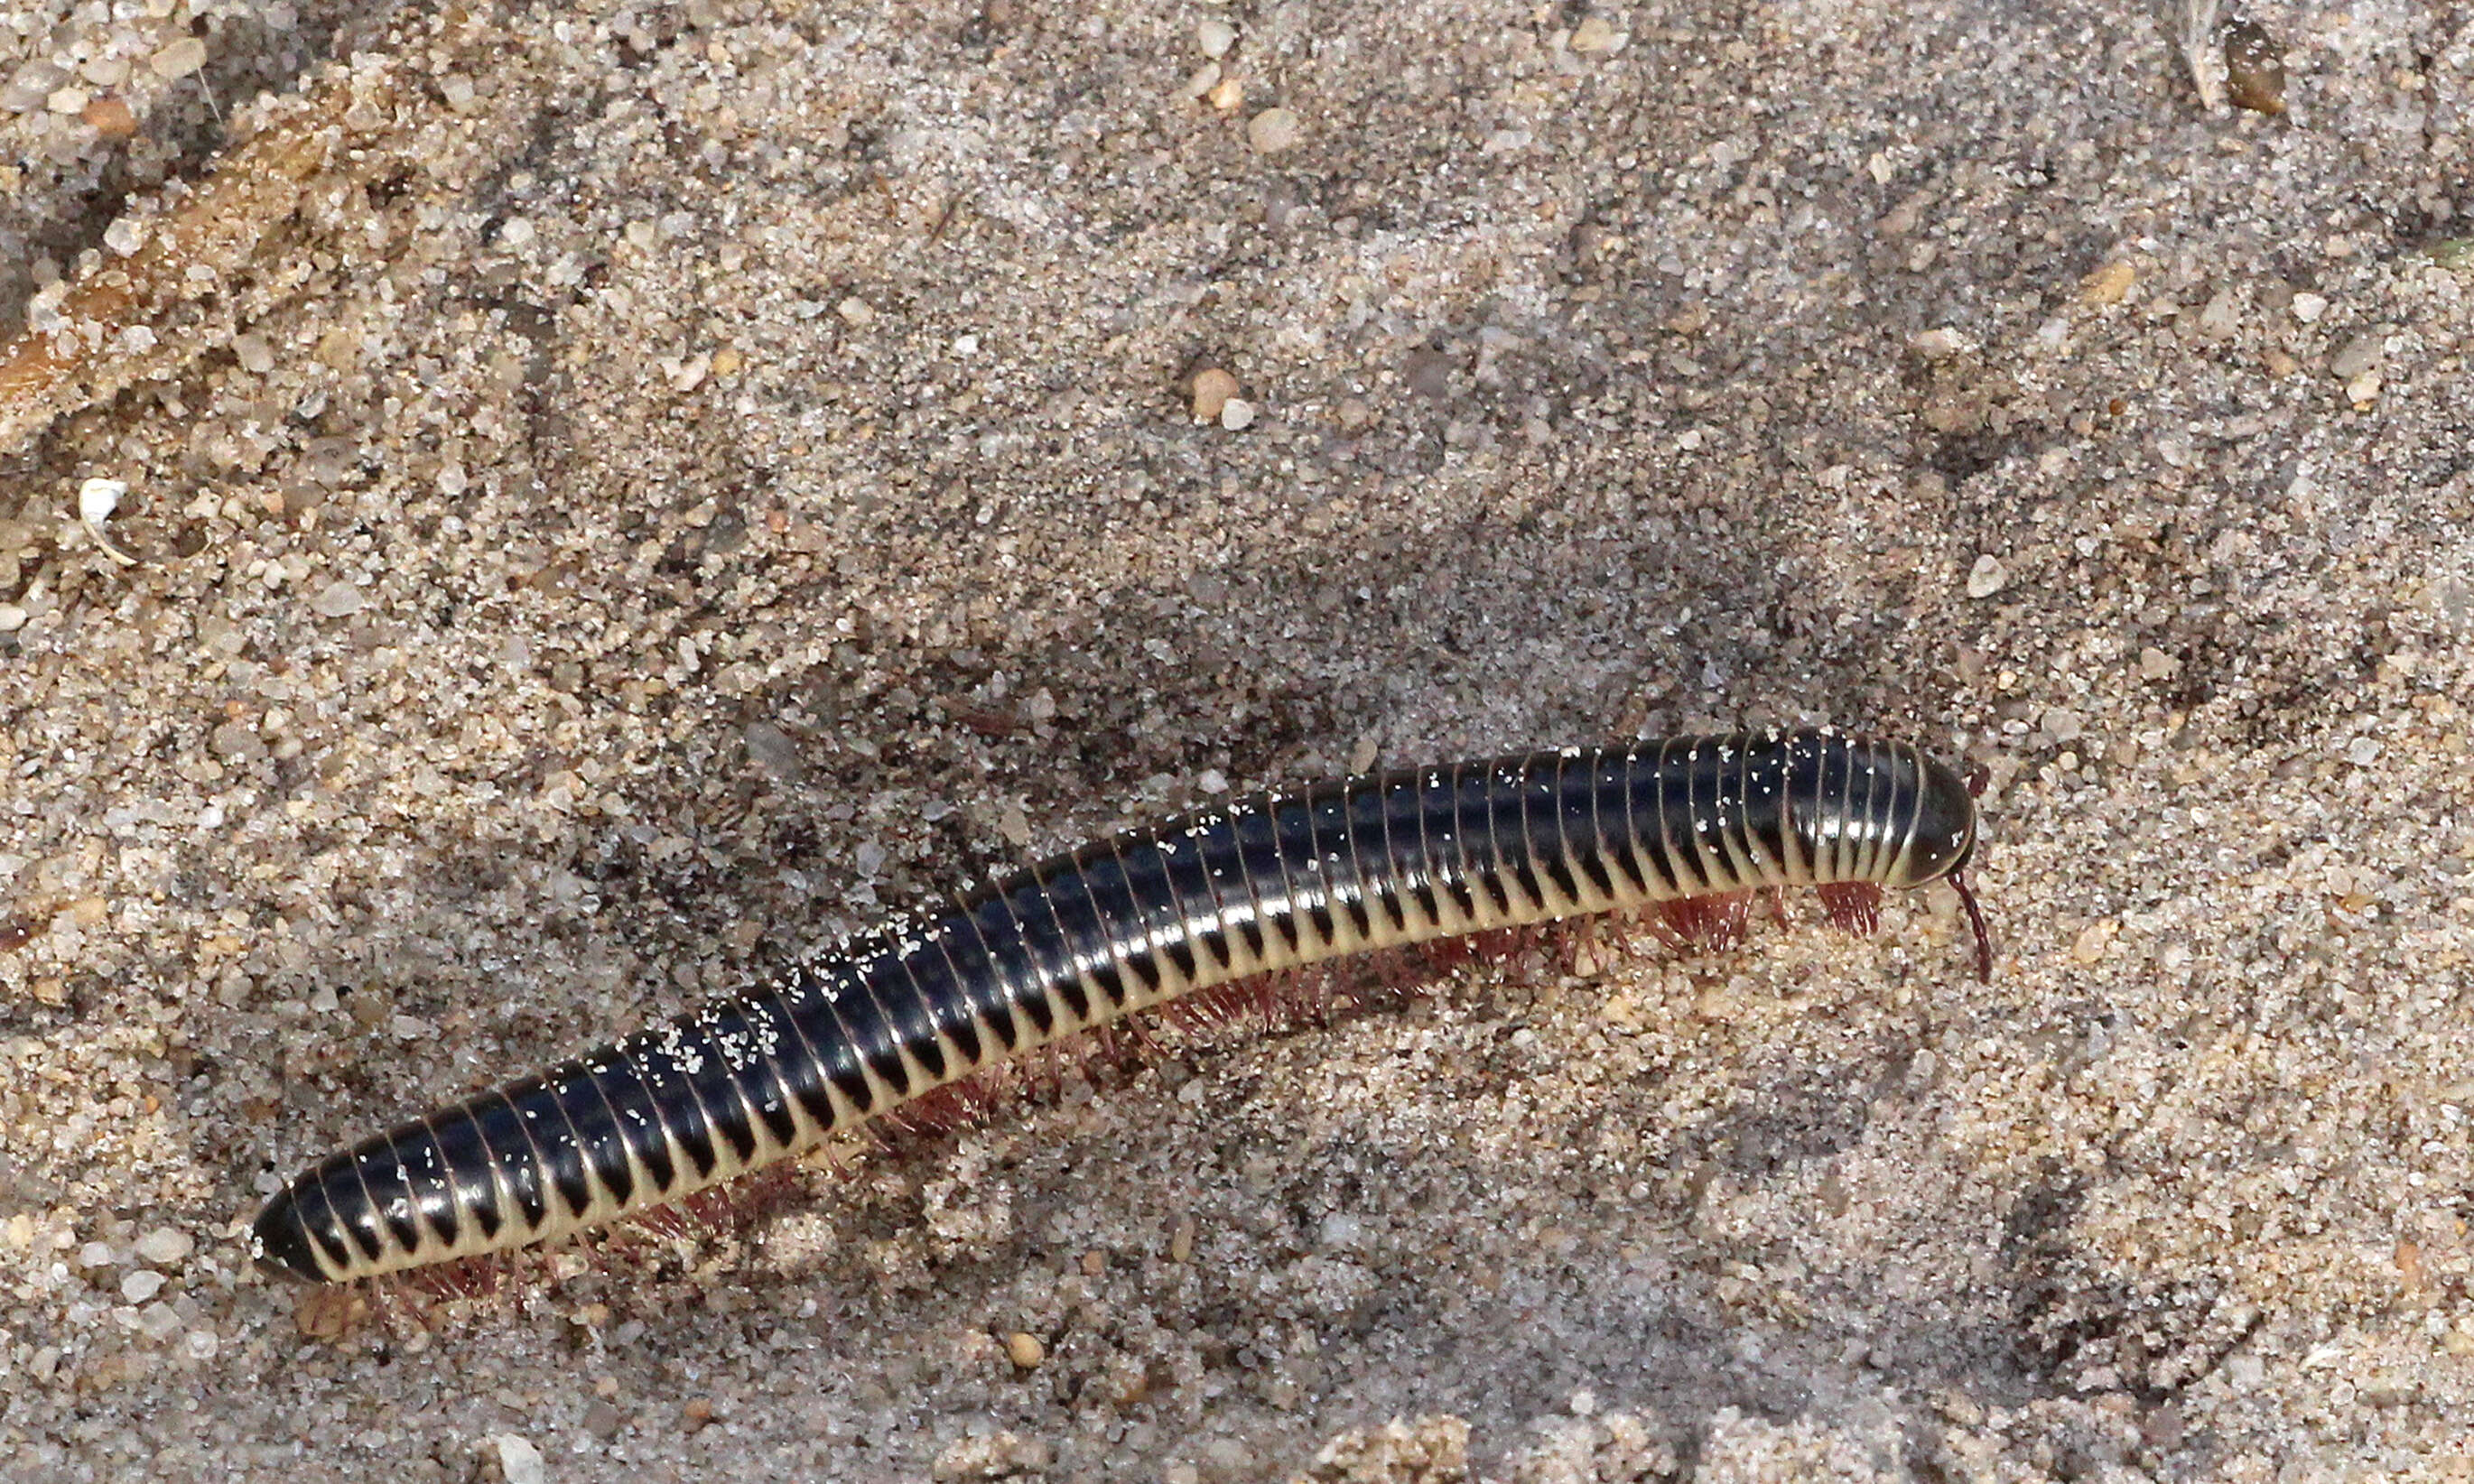 Image of Spirobolidae